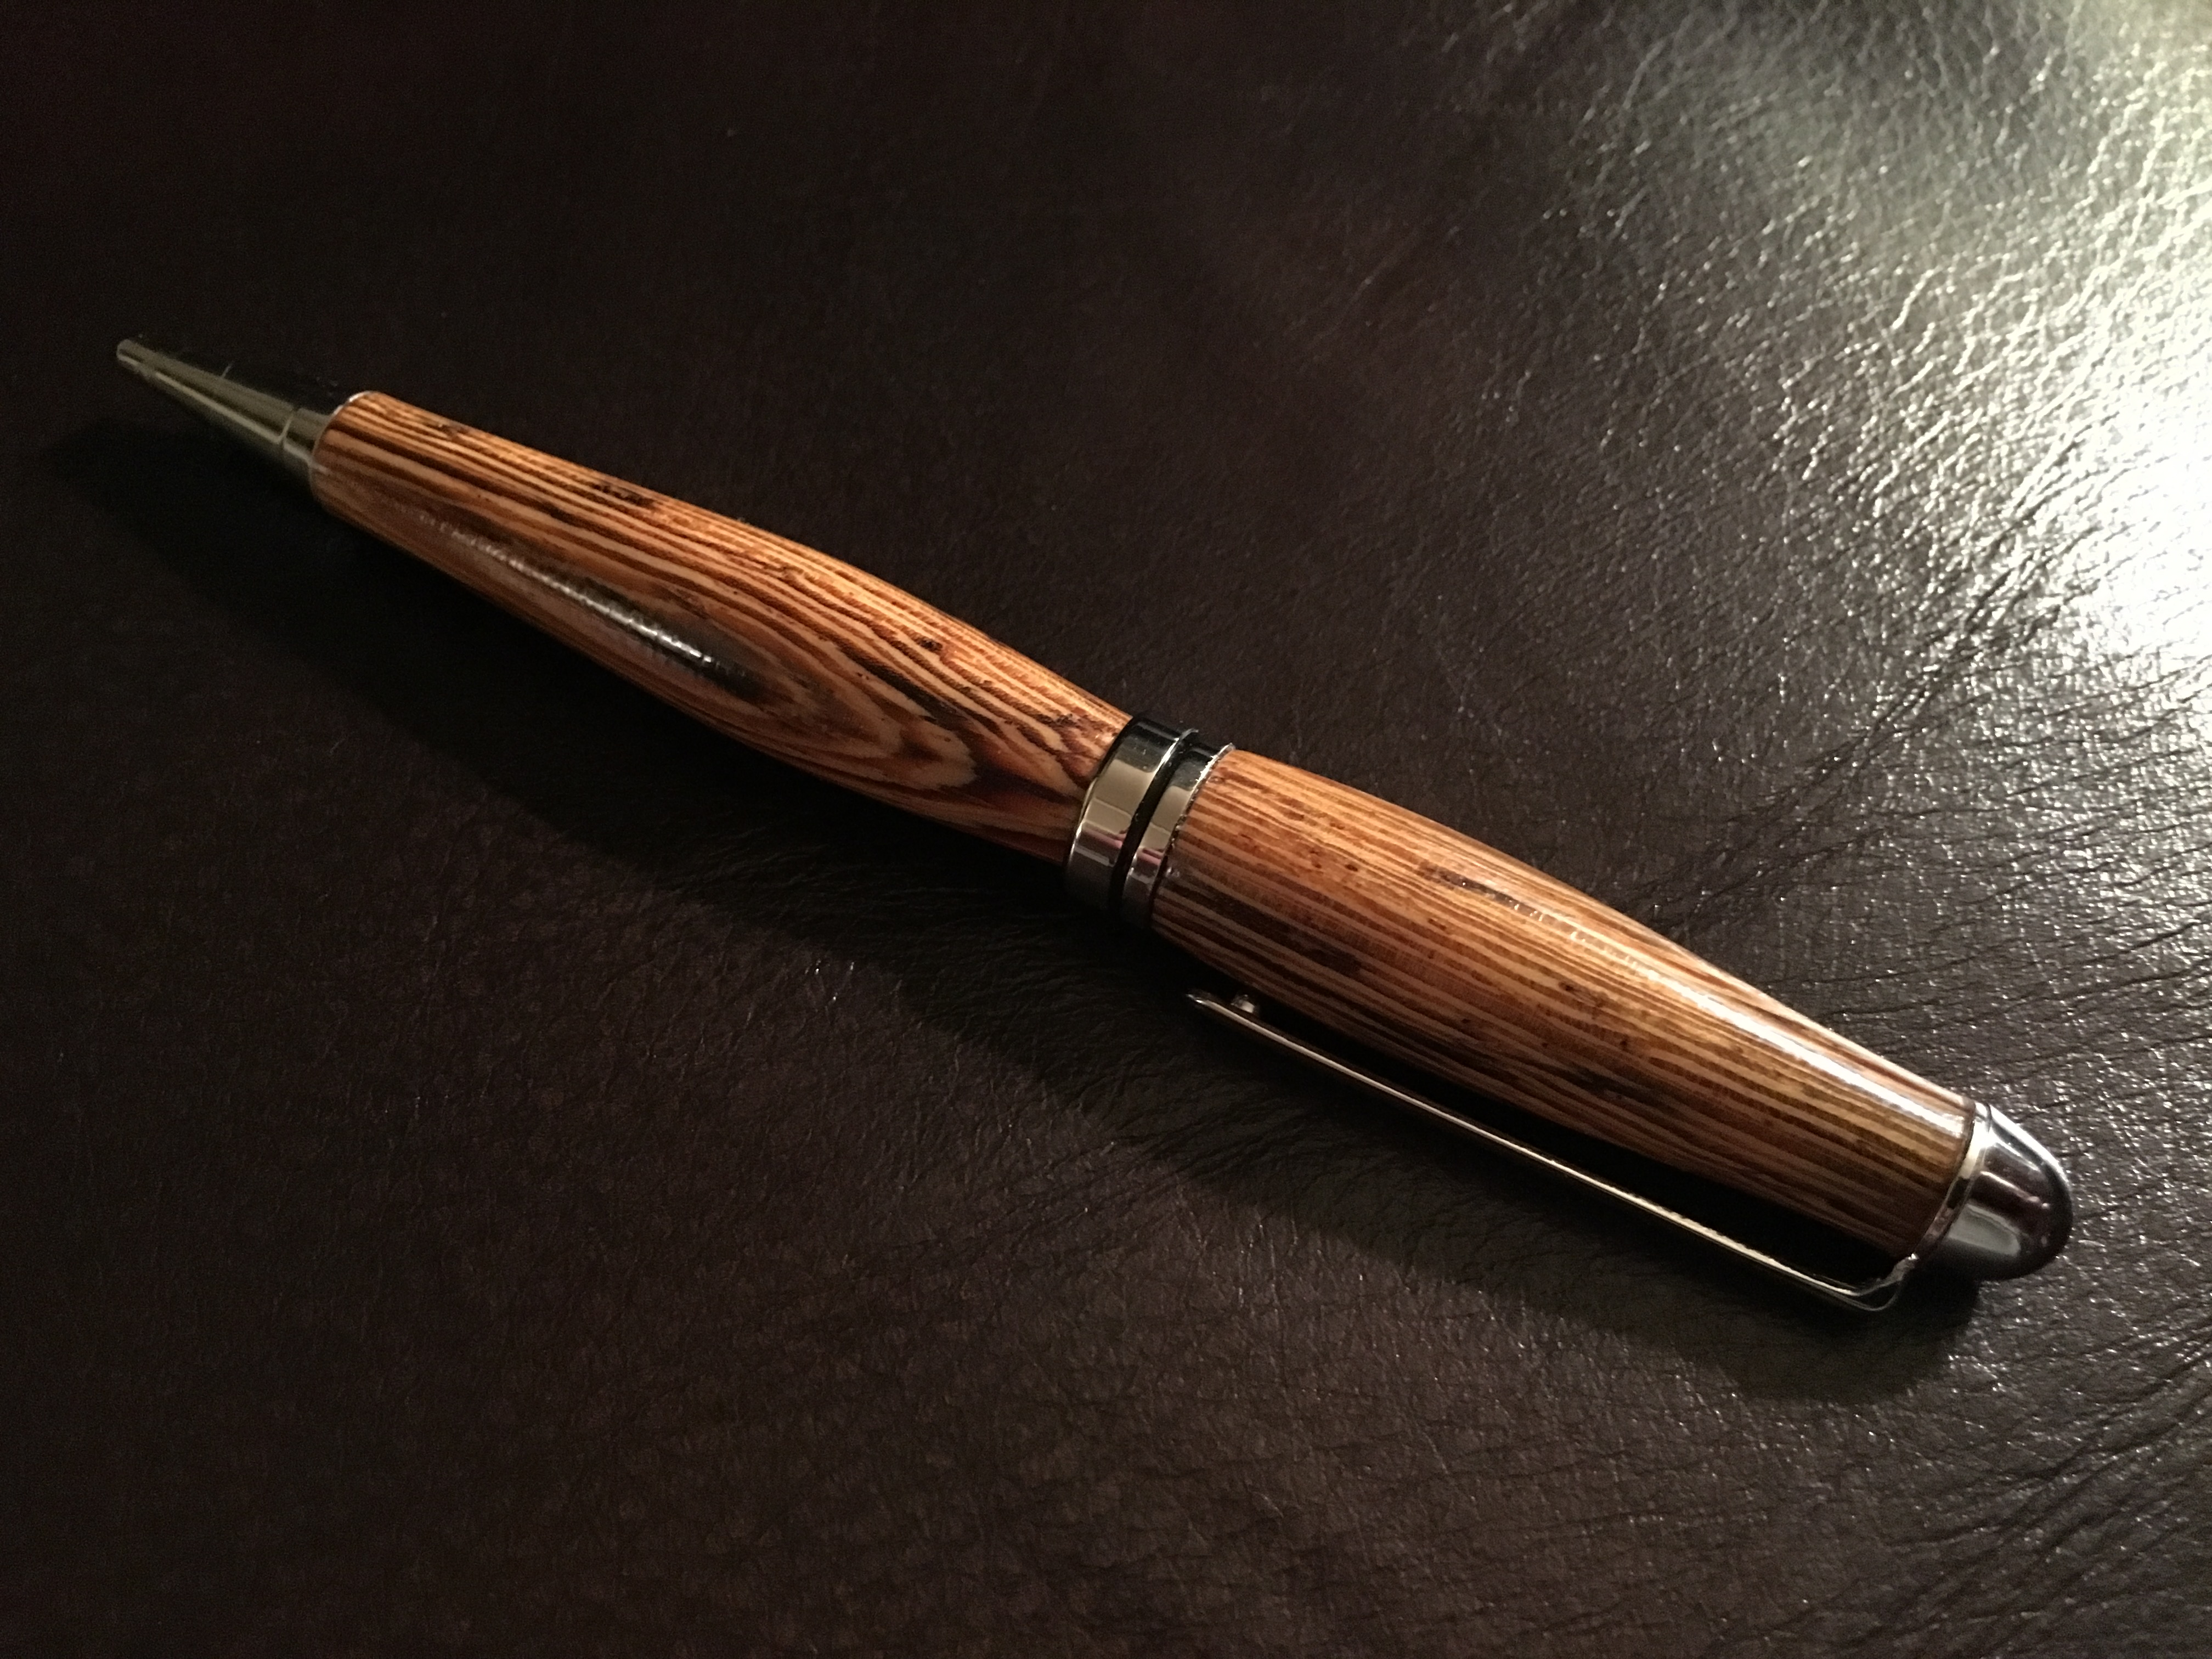 Wenge wood, Summit pen